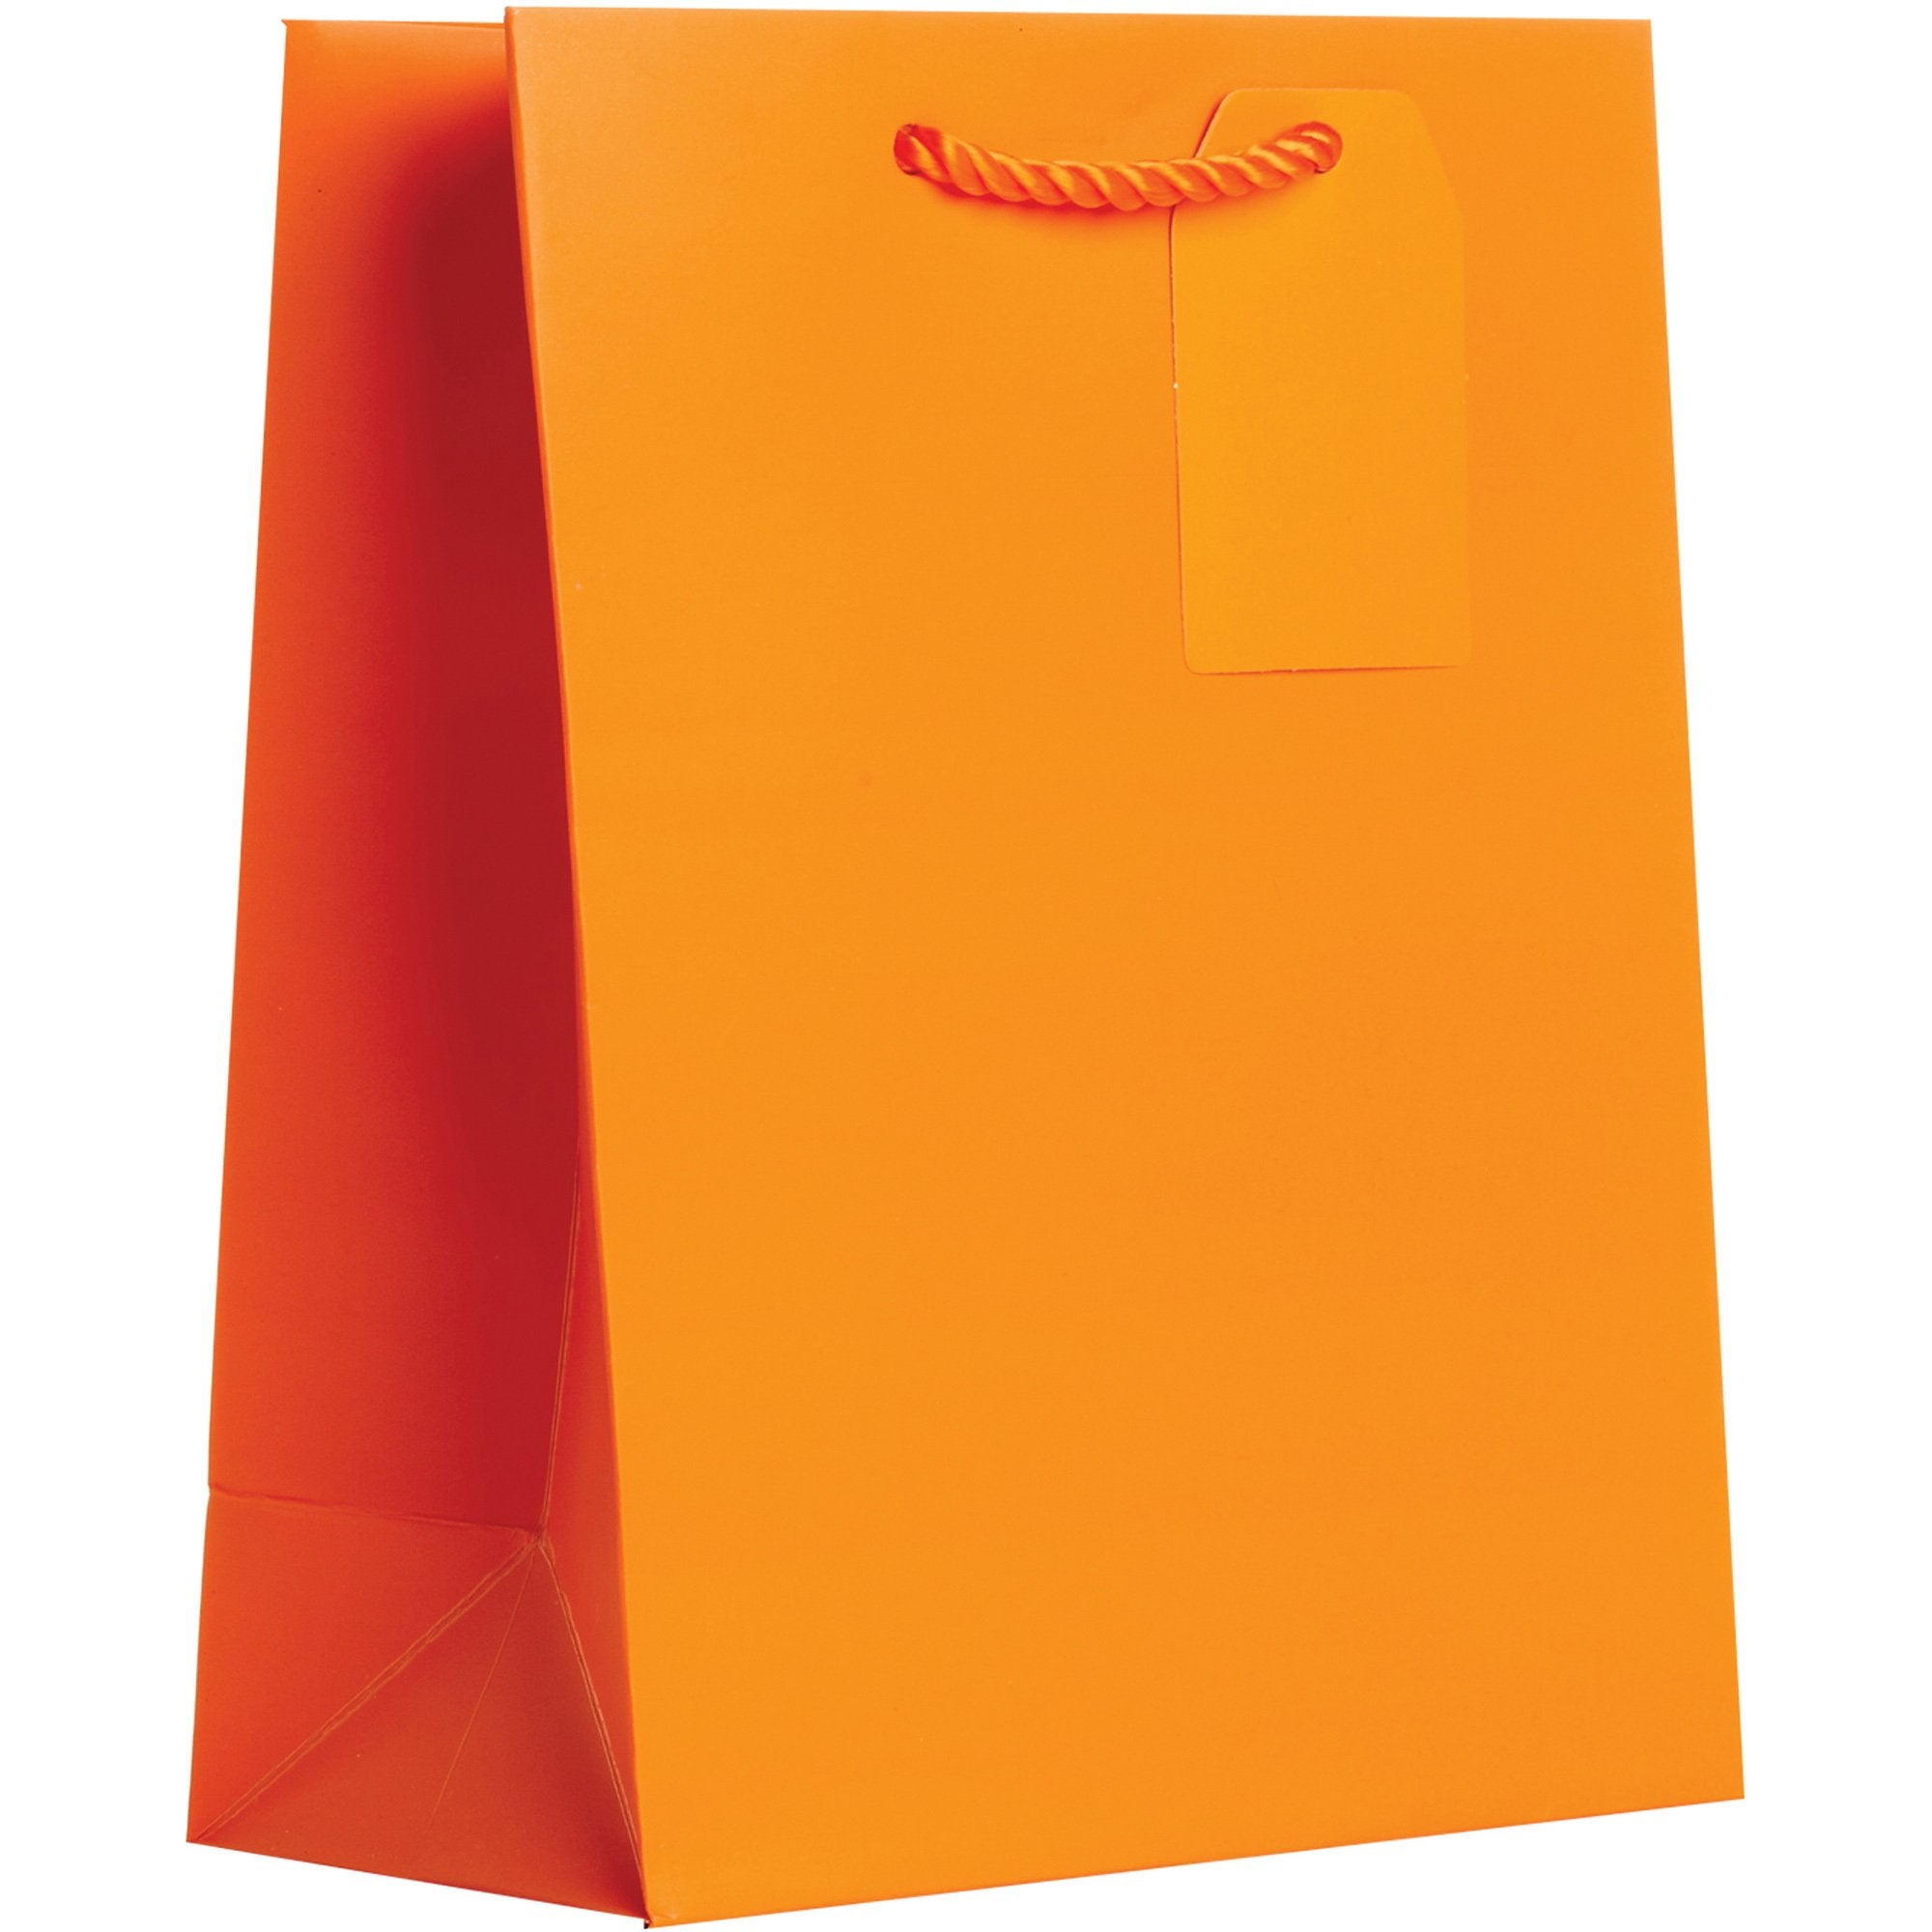 Heavyweight Solid Color Medium Gift Bags, Matte Orange